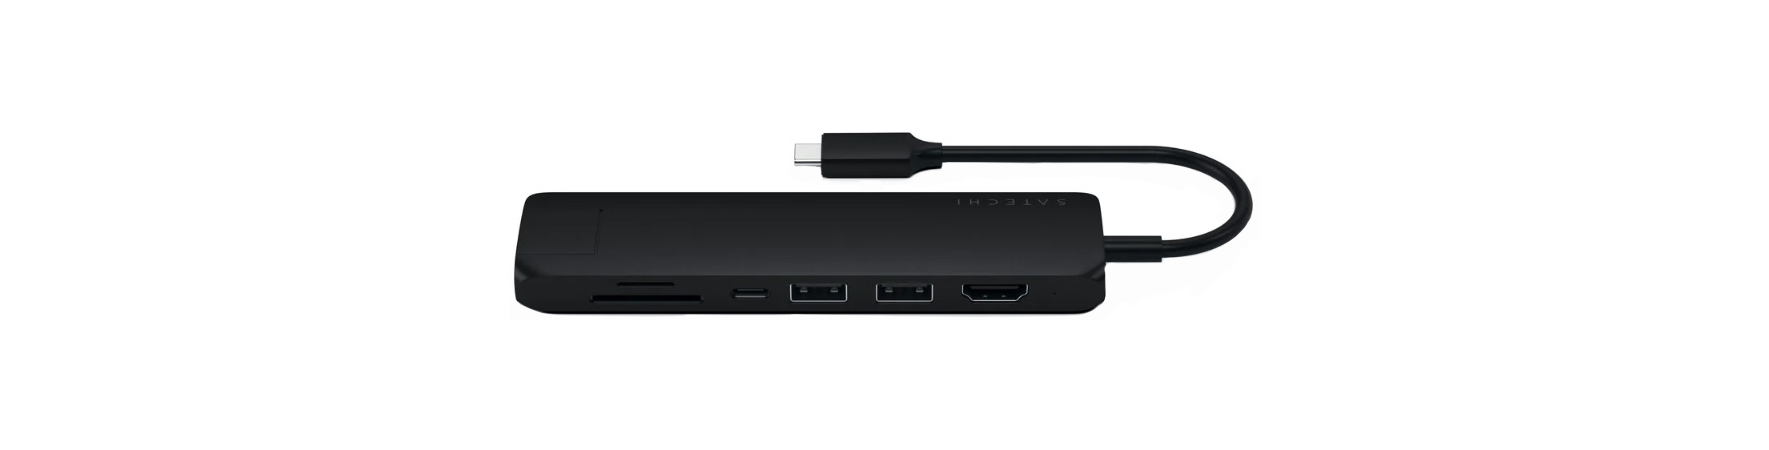 USB-хаб Satechi Aluminum Multi-Port Adapter with Ethernet Type-C Black, изображение 4